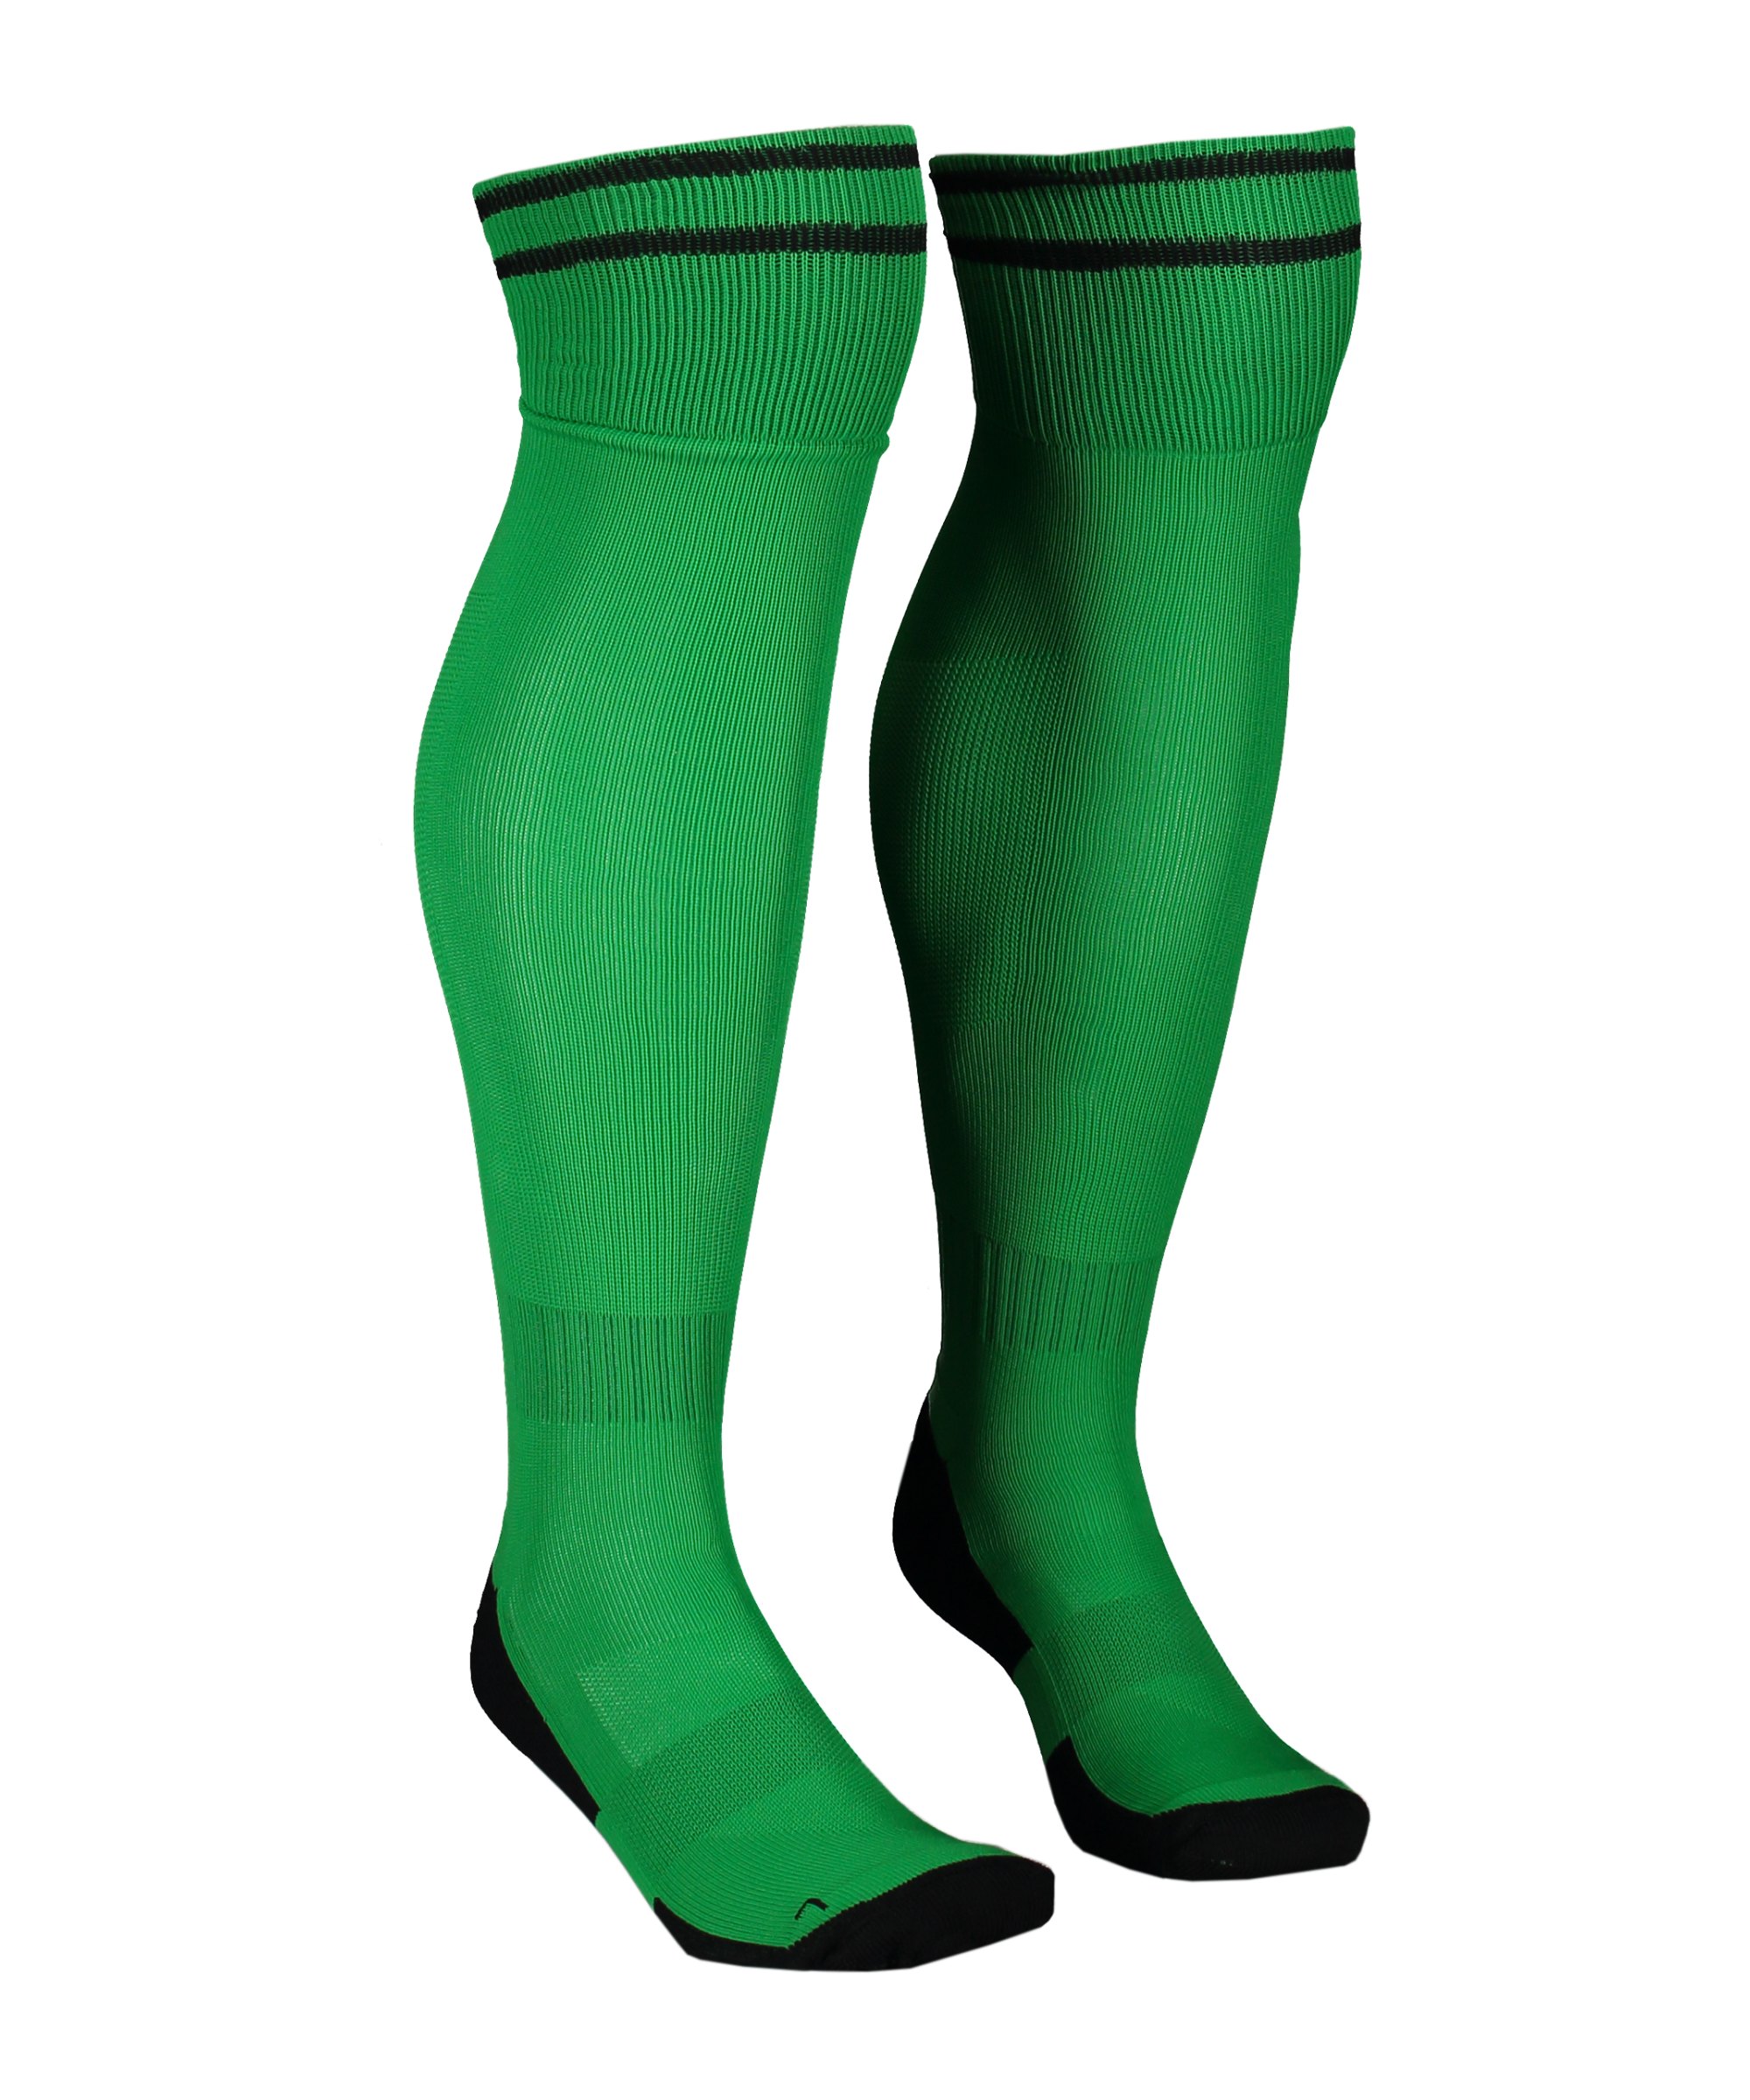 Hummel Football Sock Socken F6235 - mehrfarbig